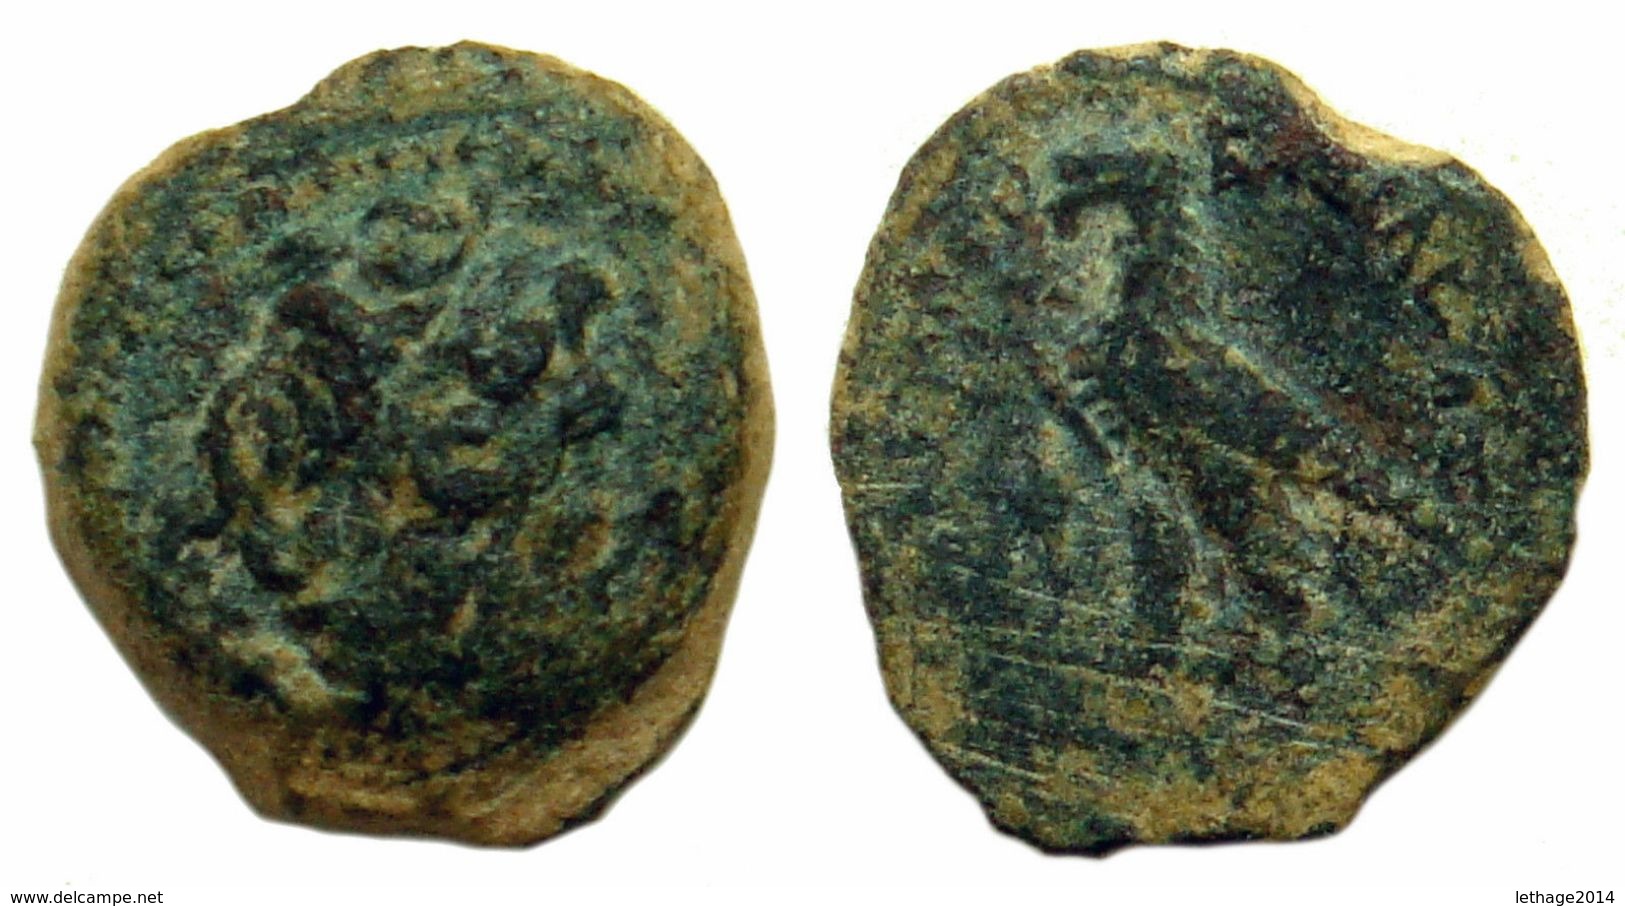 Coin PTOLEMY II TOLOMEO II FILADELFO Philometor Alexandria  285 A.C.-246 A.C.Egypt Israel Lebanon Jordan Palestine Libya - Orientales